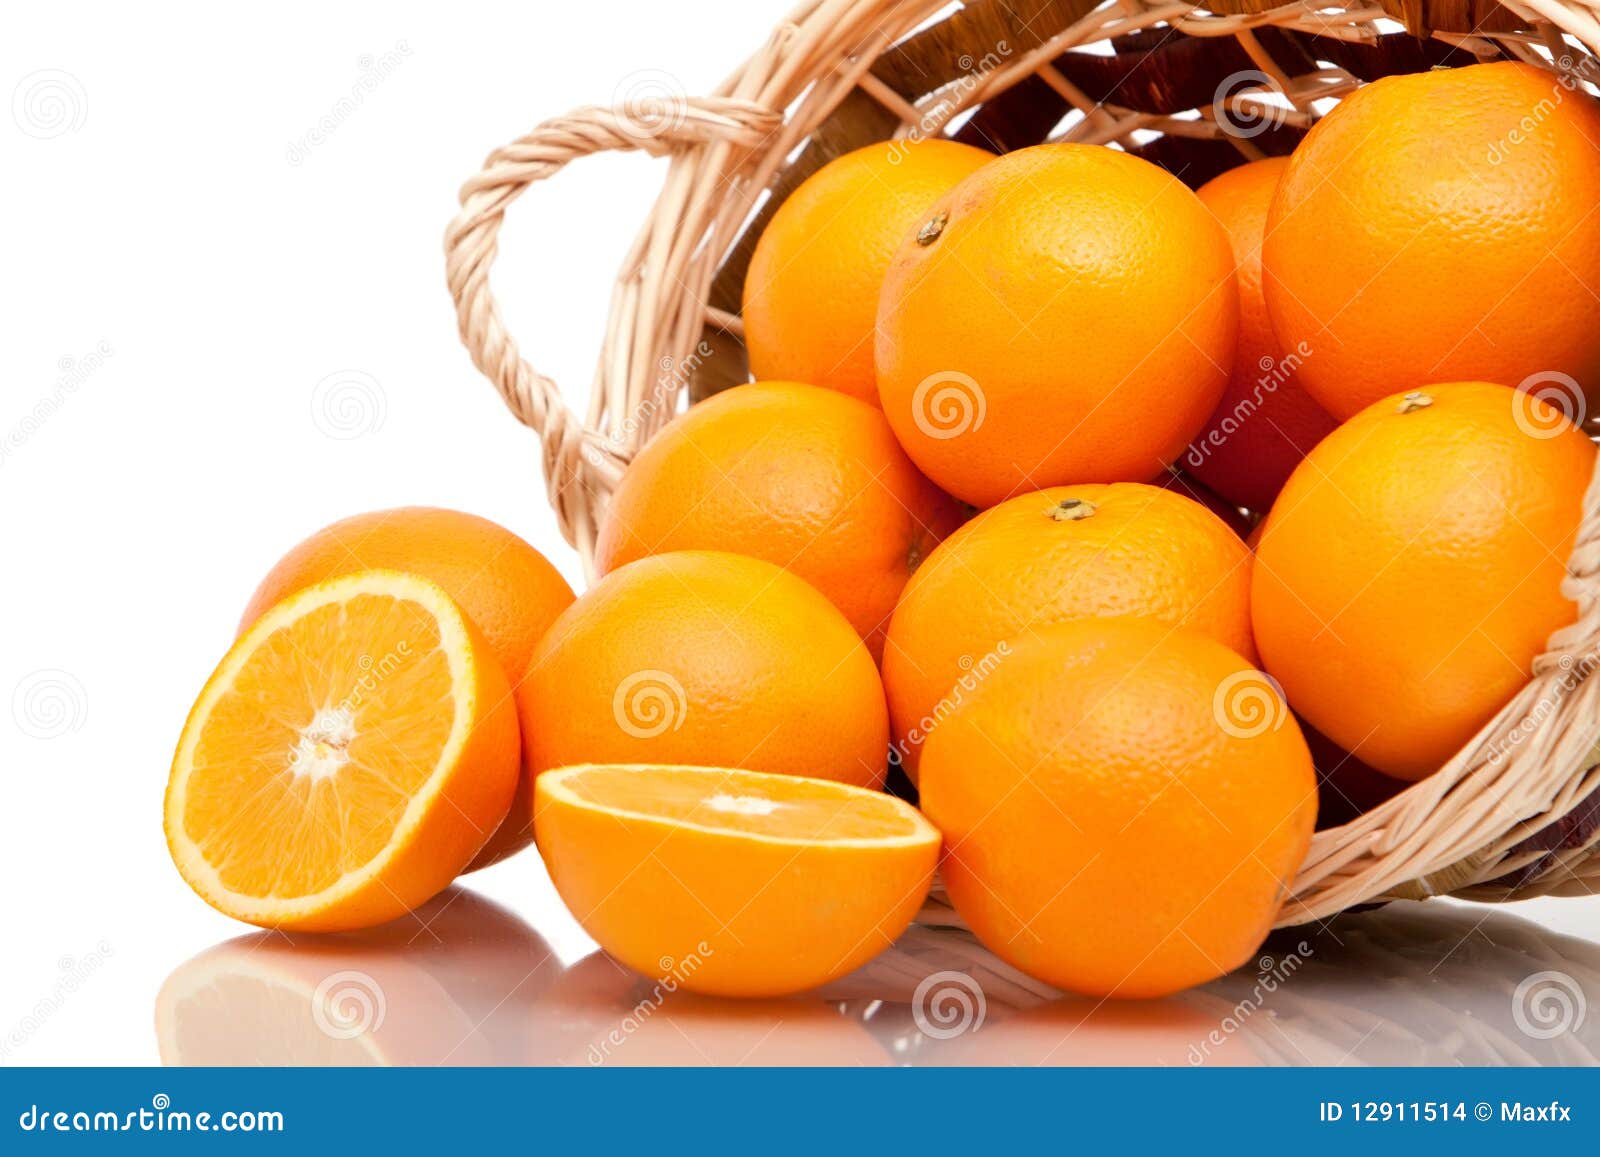 Basket Of Oranges Stock Images - Image: 12911514